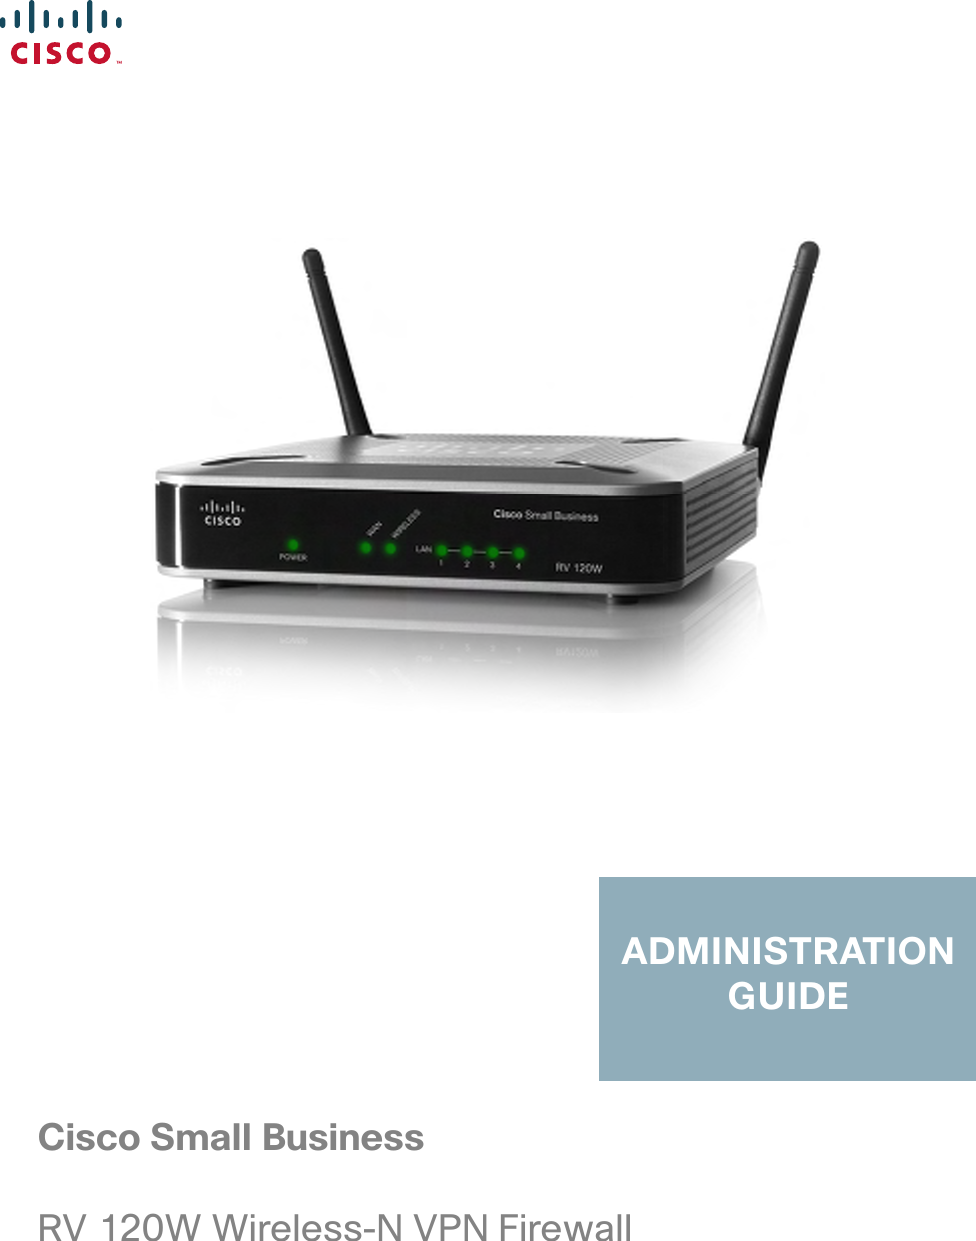  Cisco Small BusinessRV 120W Wireless-N VPN Firewall ADMINISTRATION GUIDE